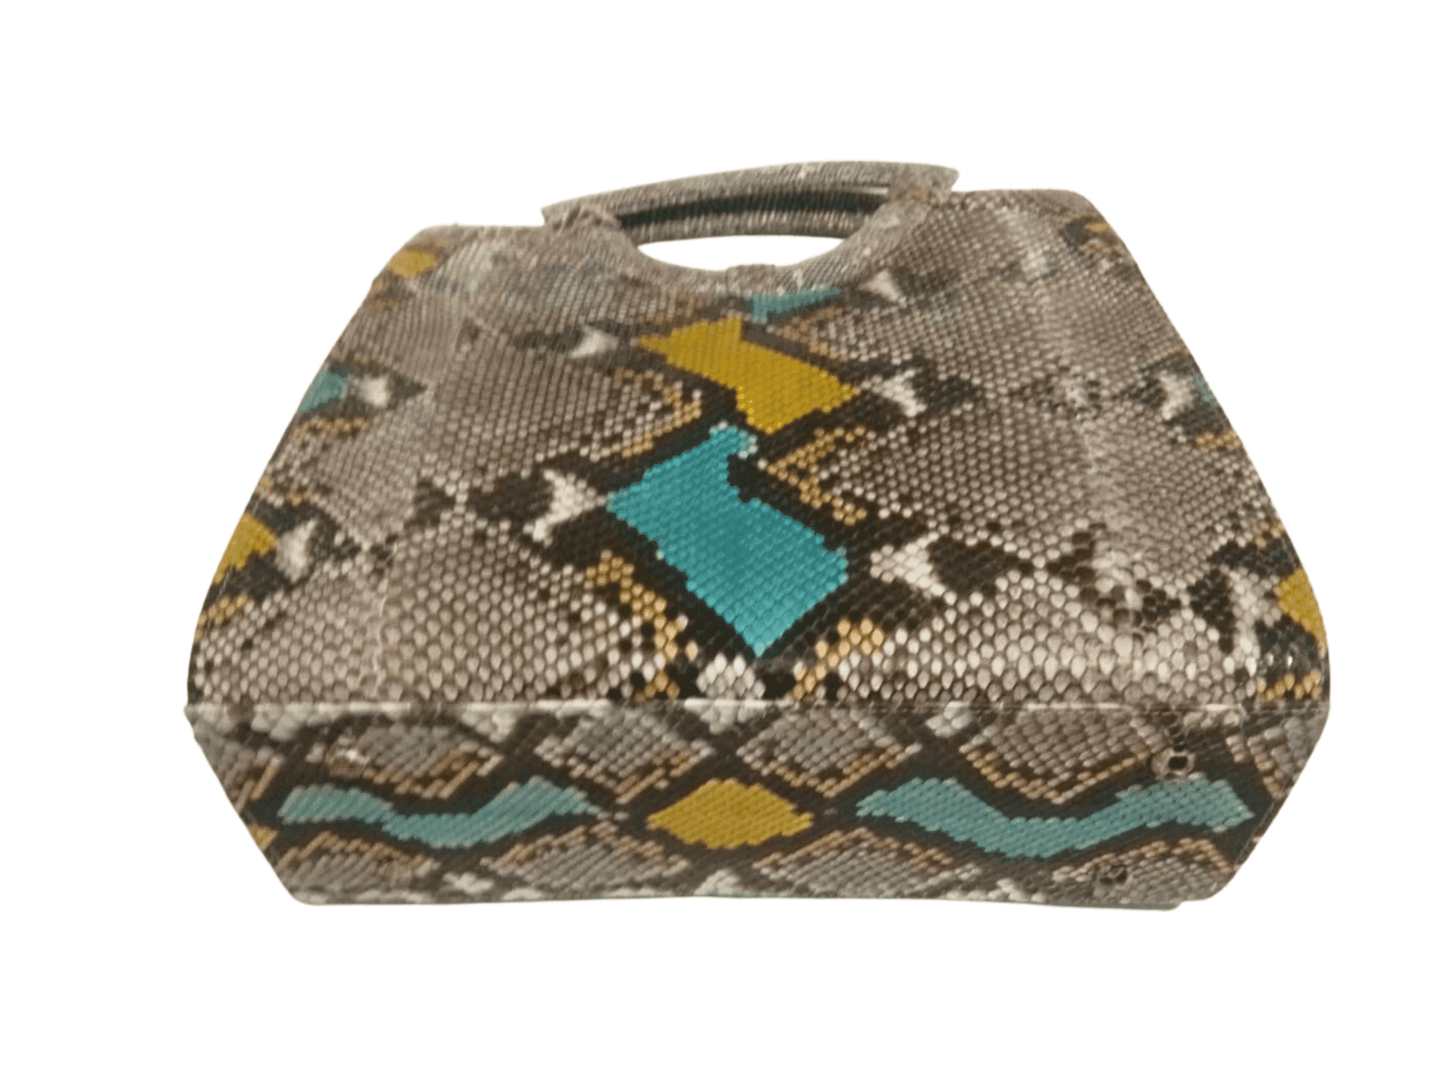 Tote Python Snakeskin Women Bag with Natural Lizard Skin Trim Python Jacket by LFM Fashion